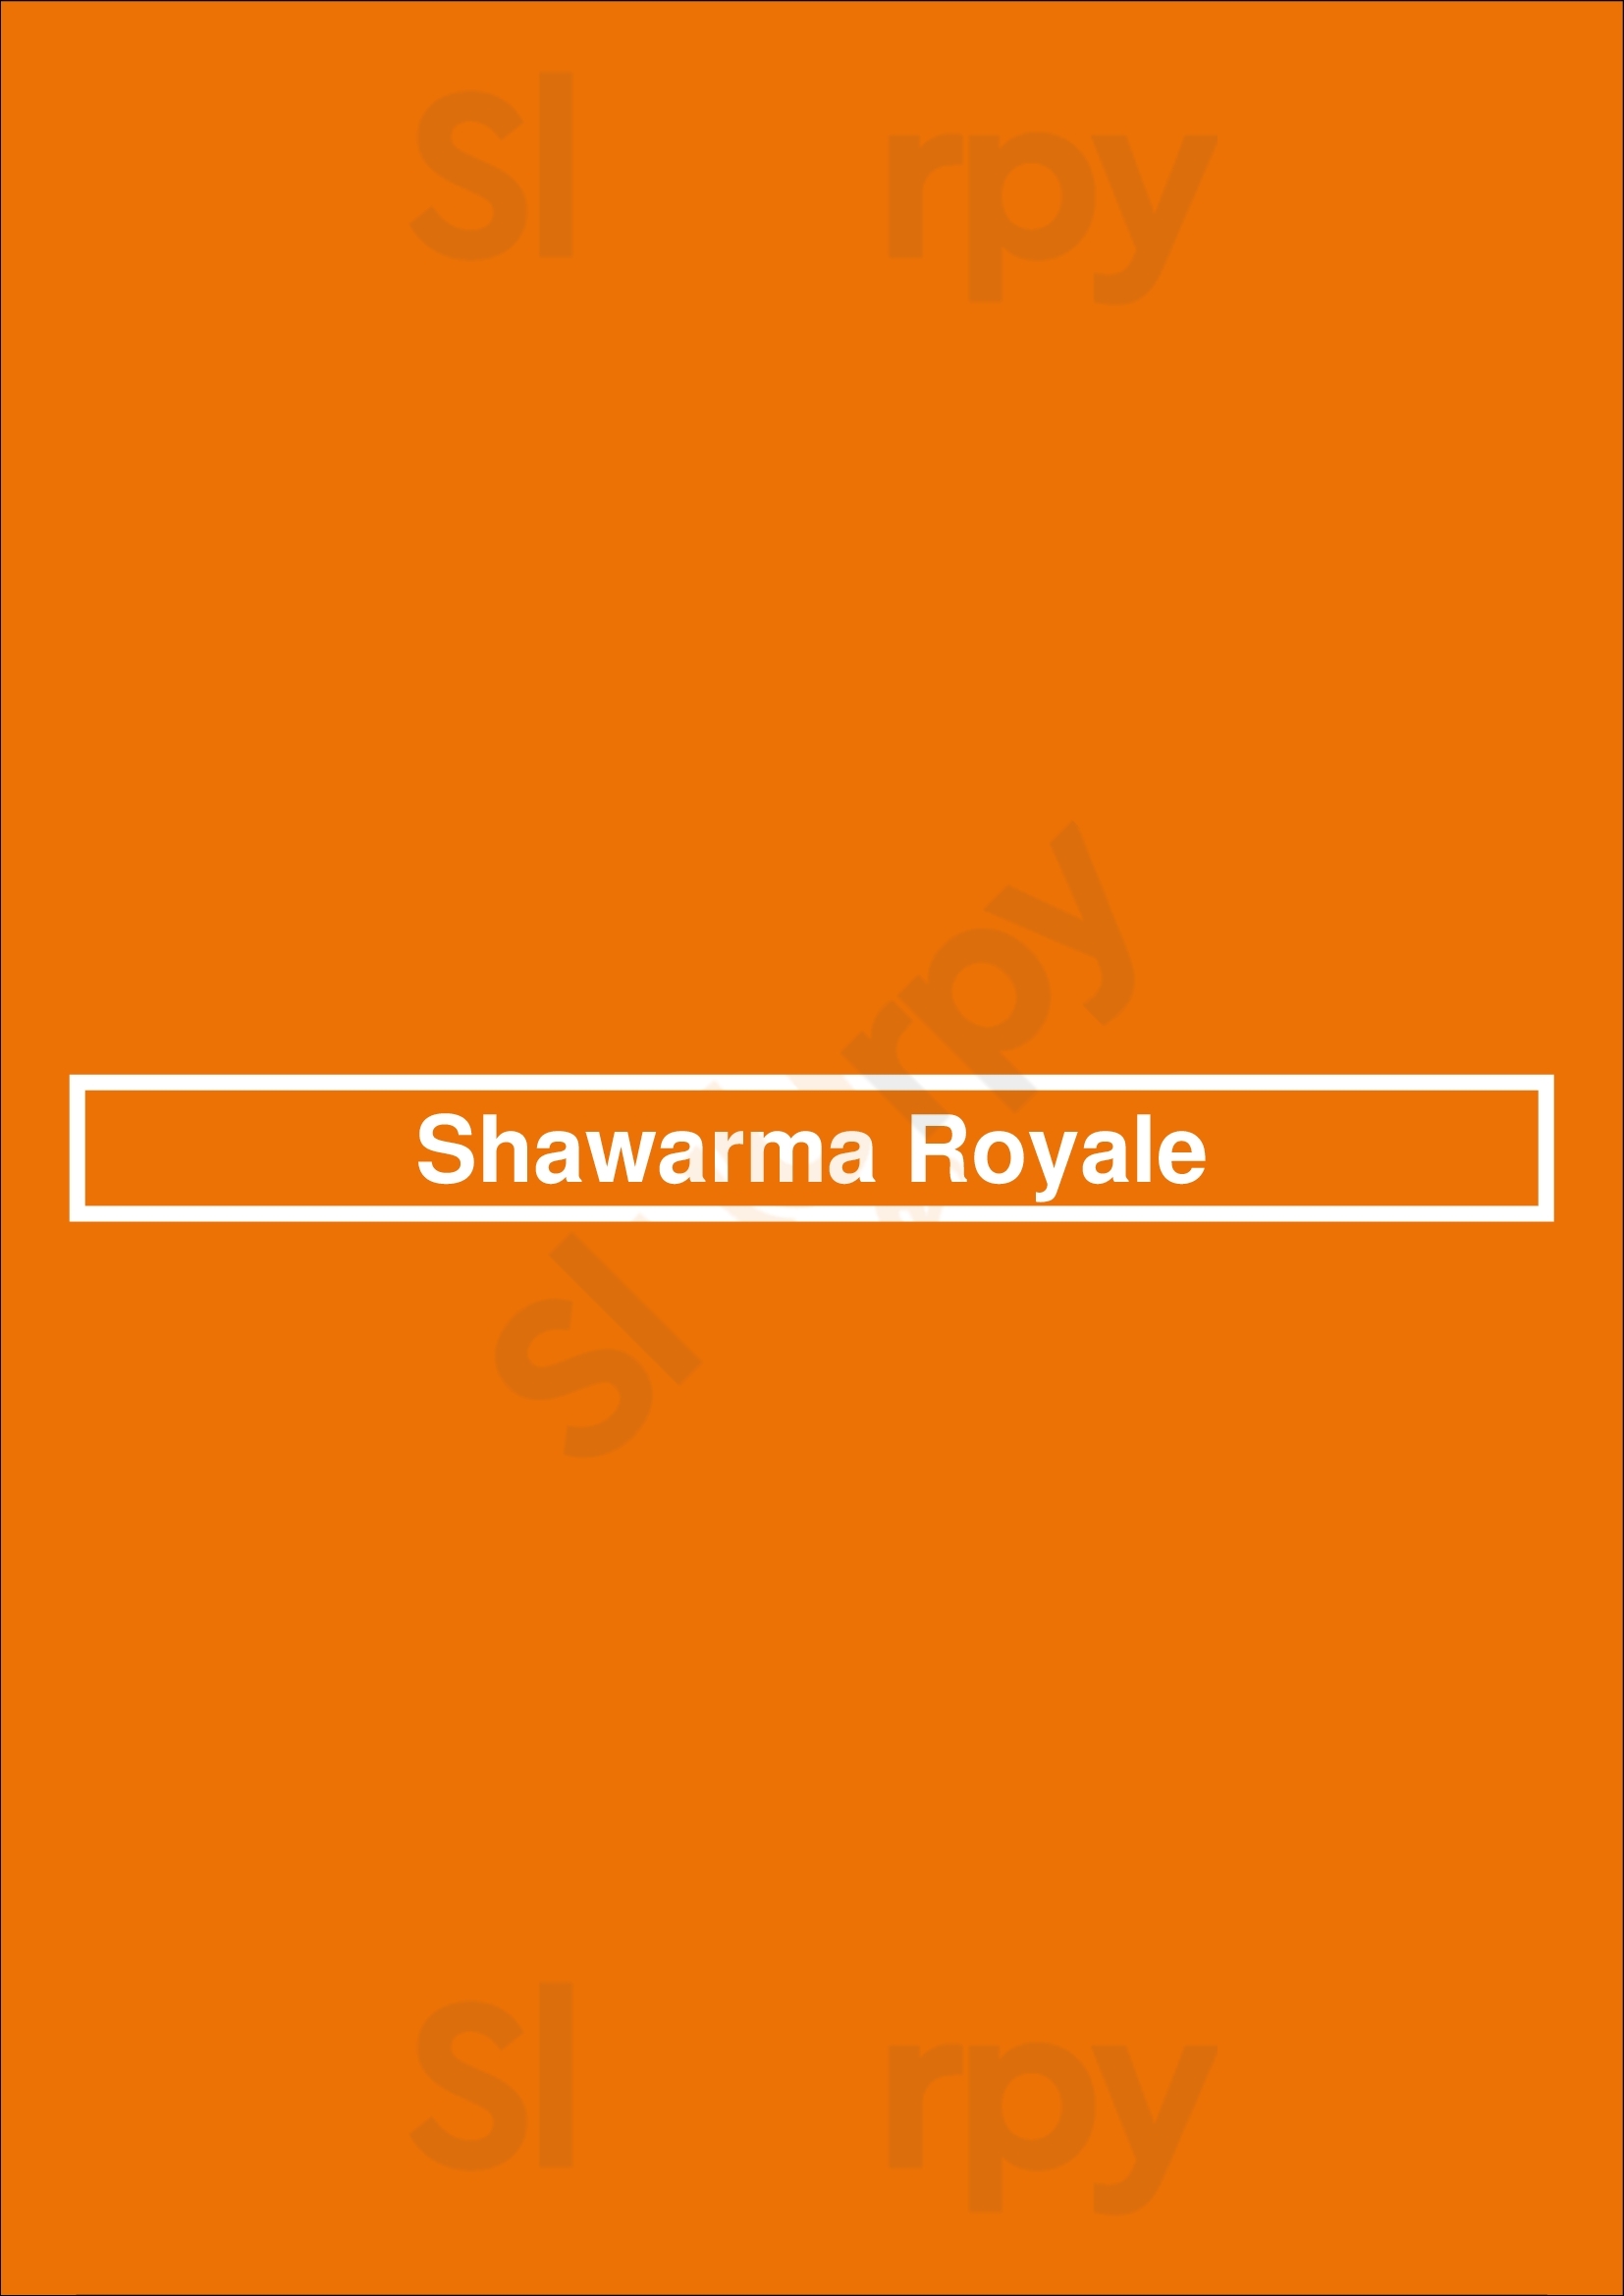 Shawarma Royale Mississauga Menu - 1